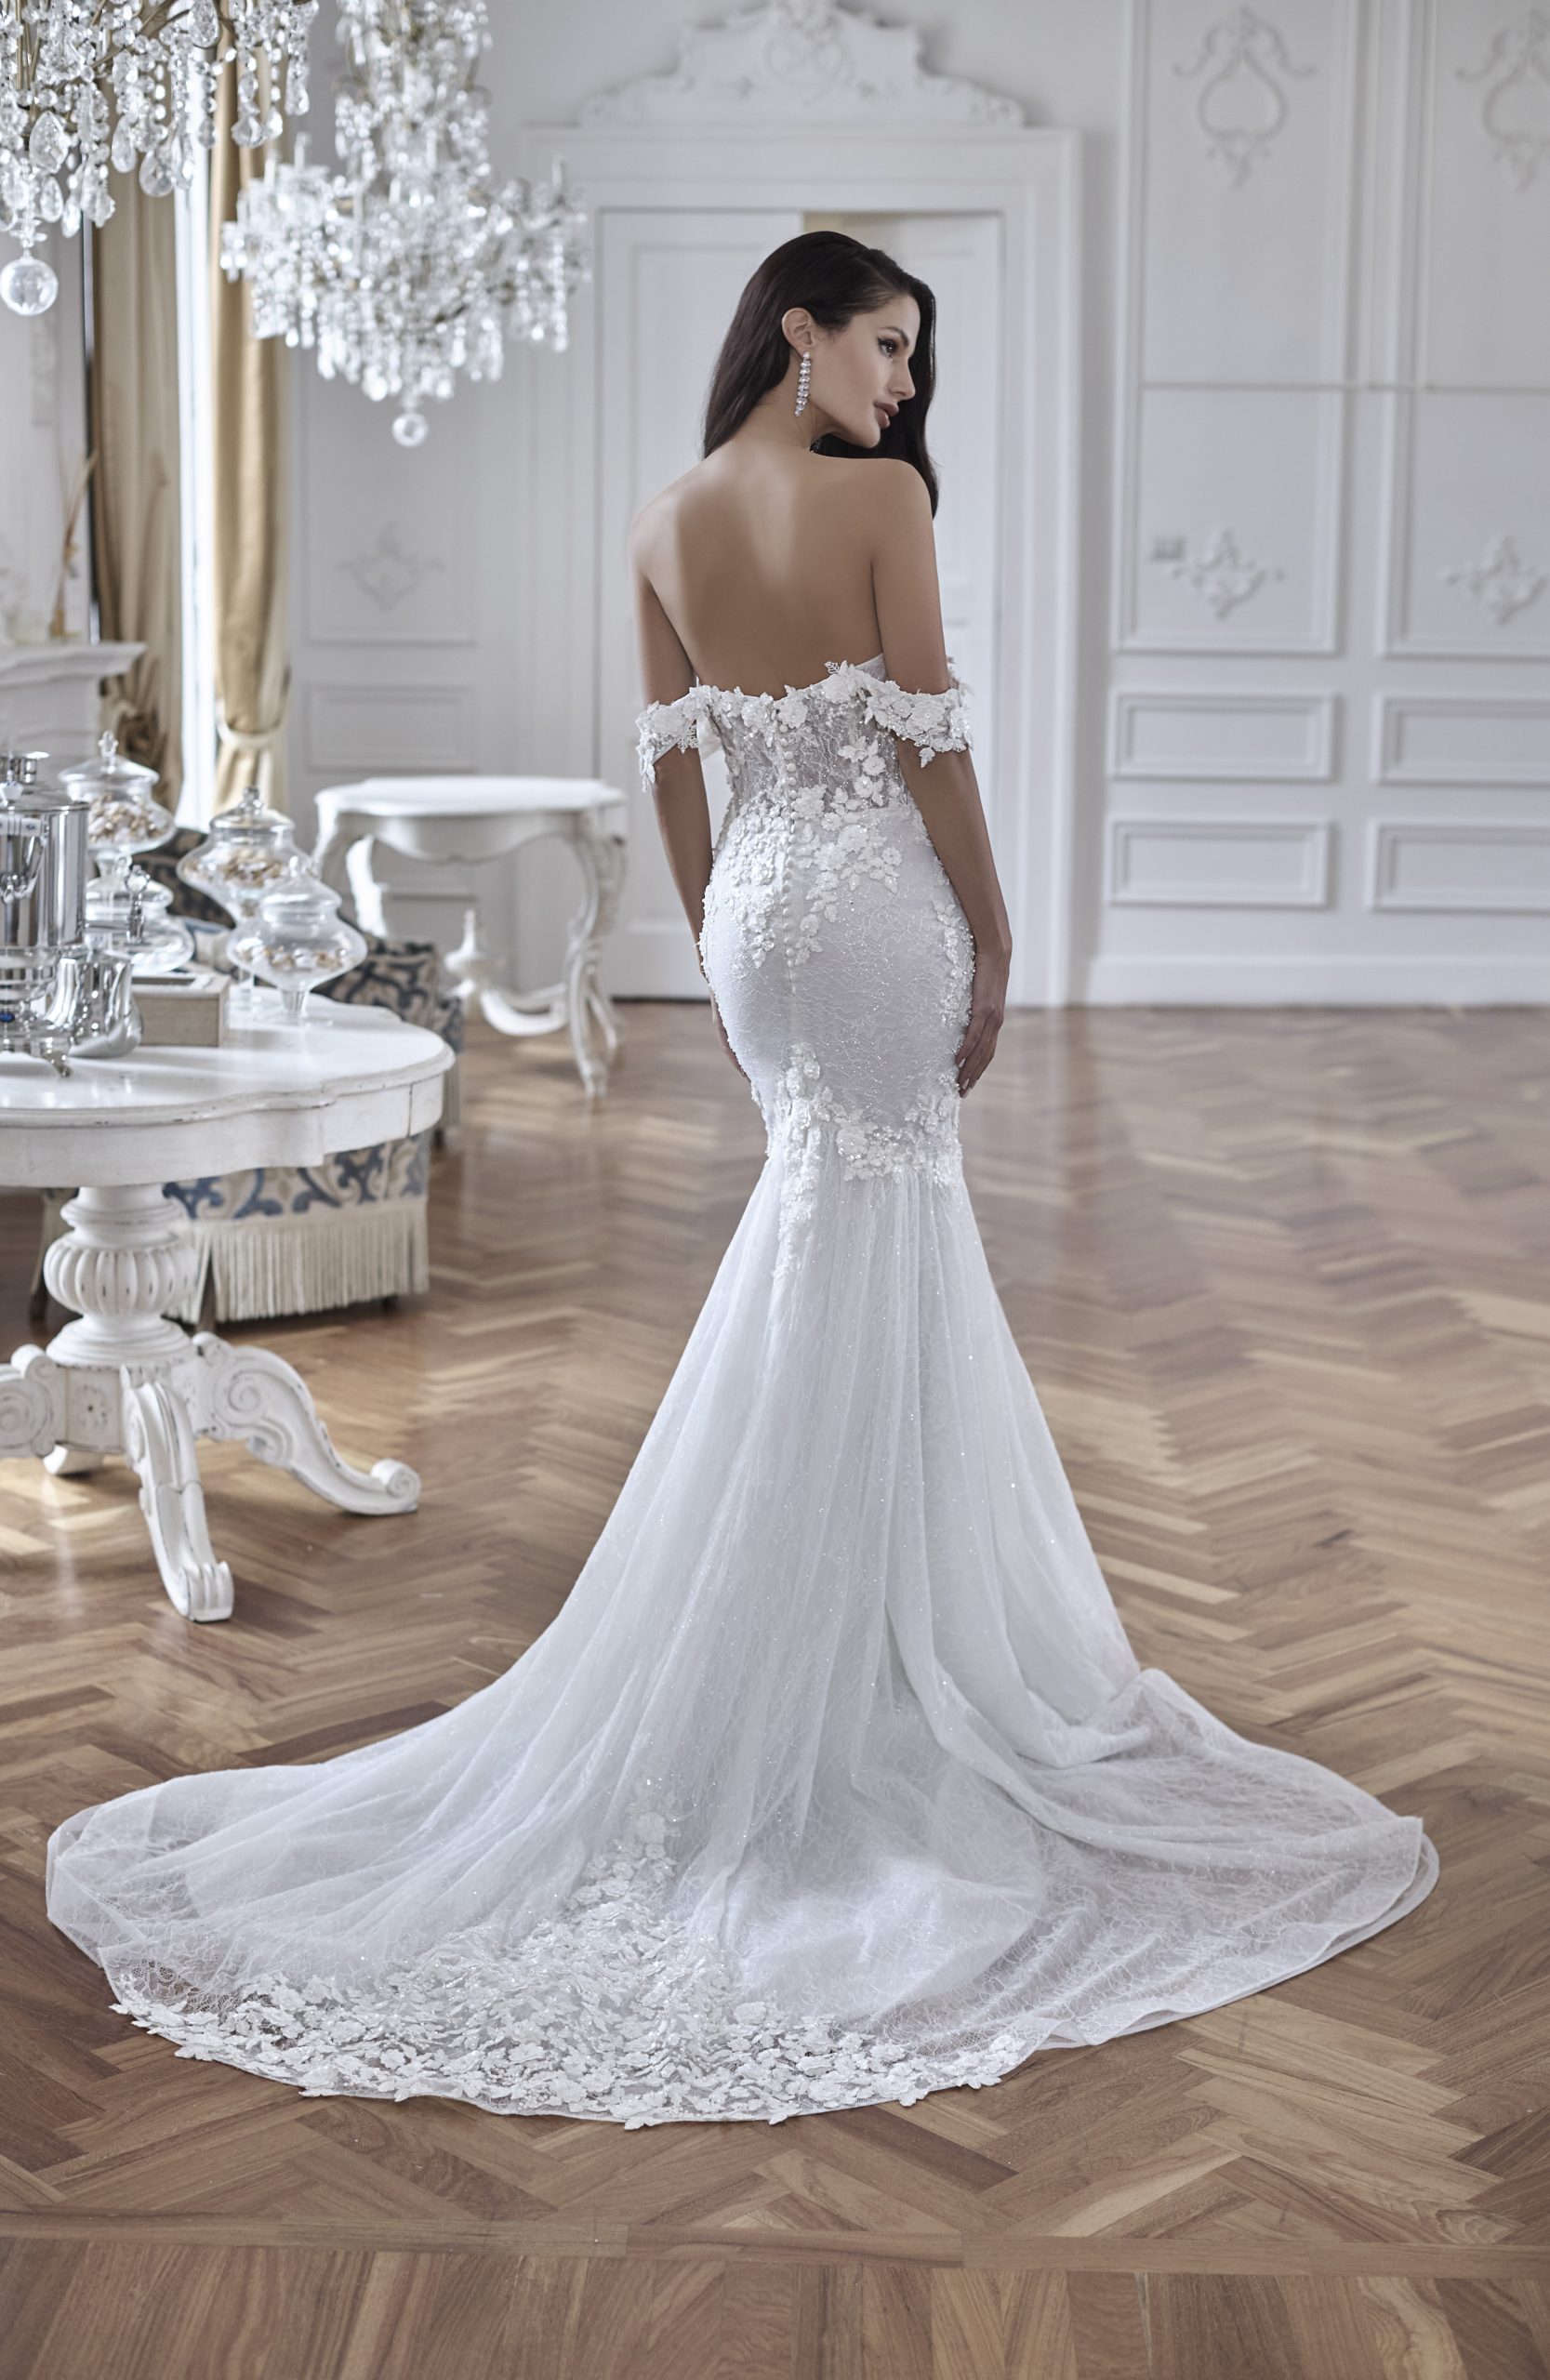 Lace A-line Wedding Dress With Deep V-neckline And High Slit